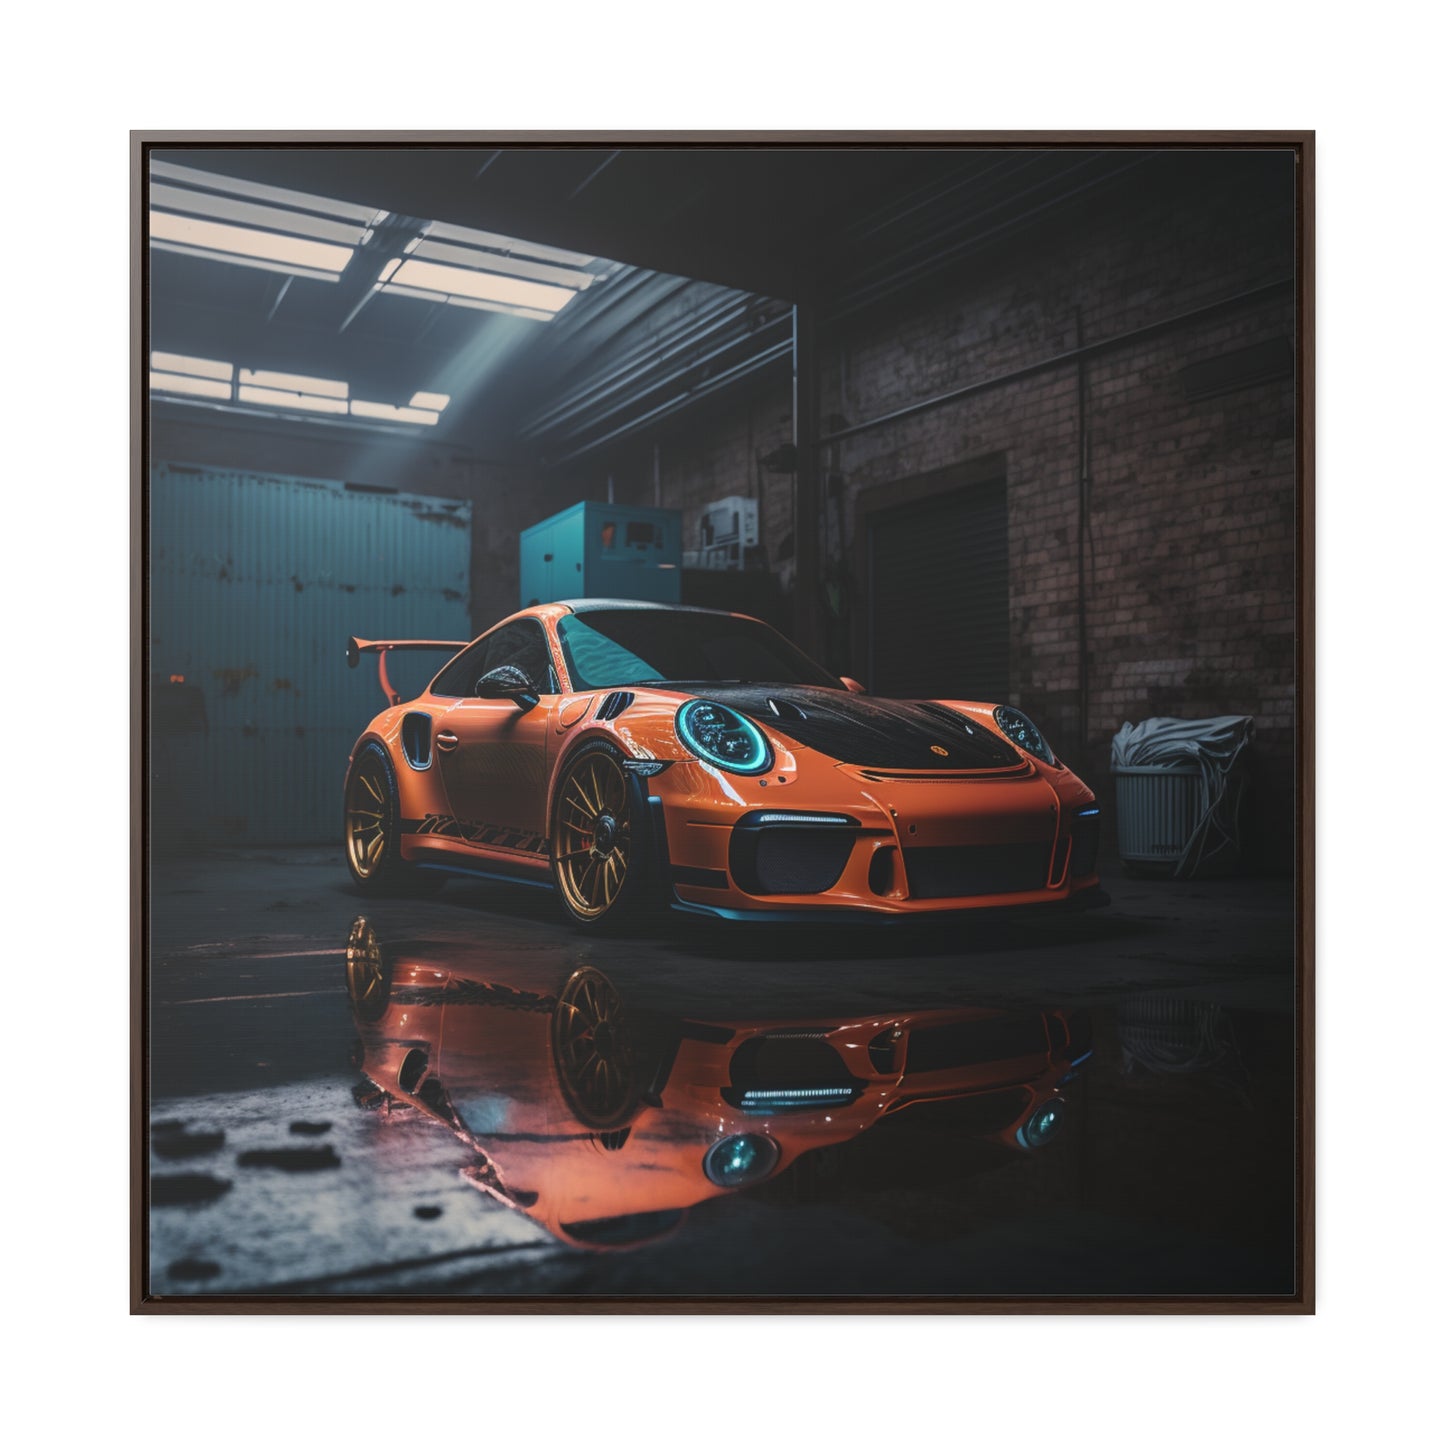 Gallery Canvas Wraps, Square Frame Porsche Color 1